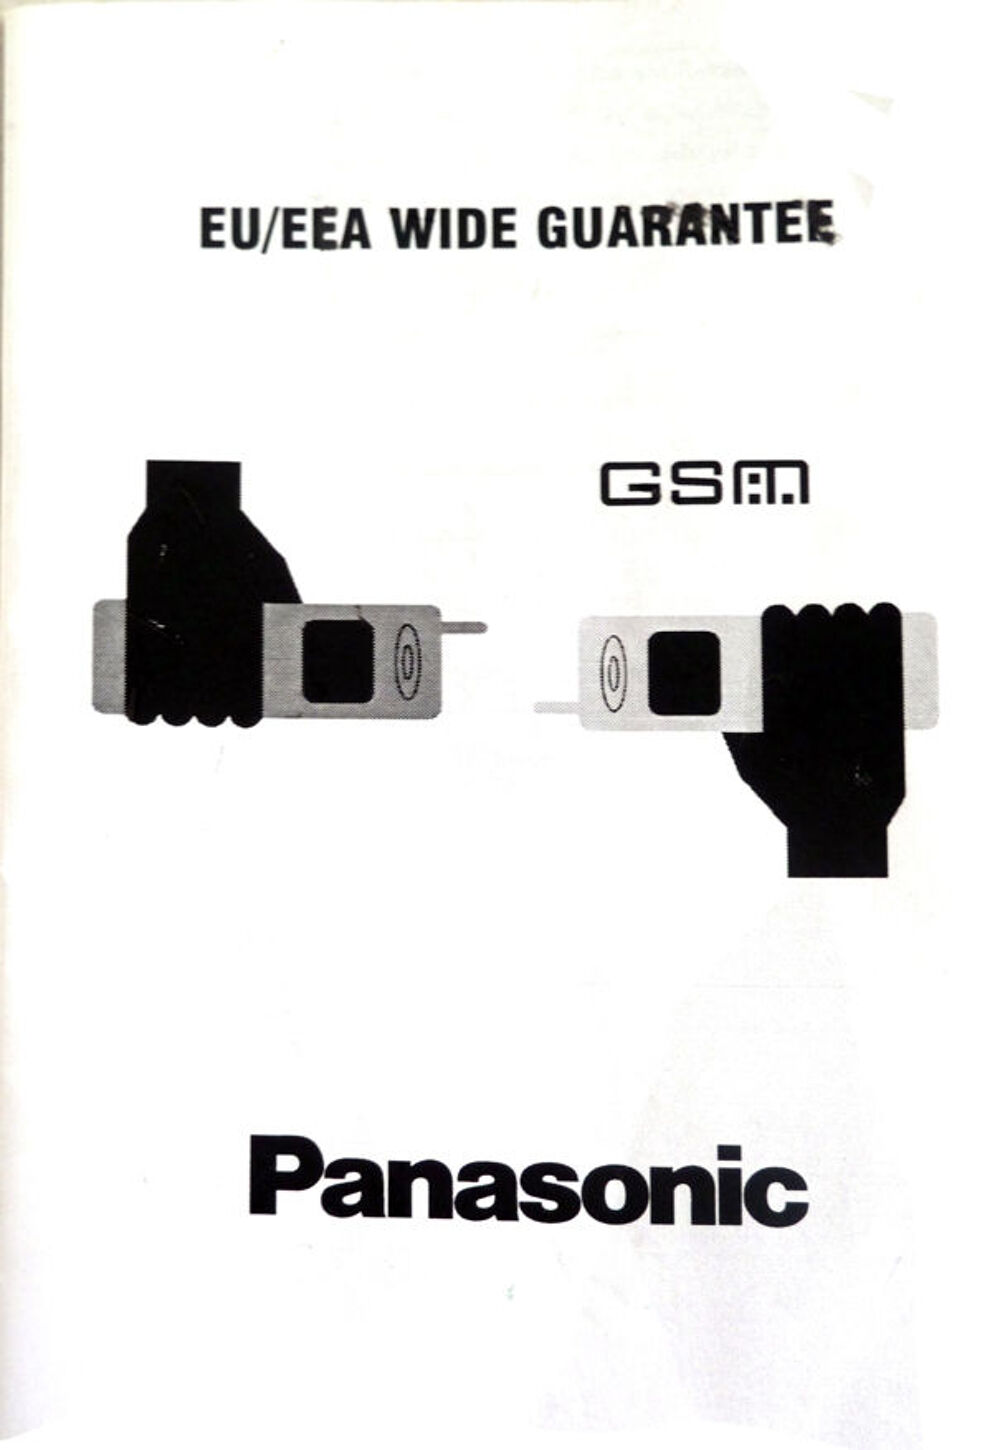 Tel Portable Panasonic Tlphones et tablettes